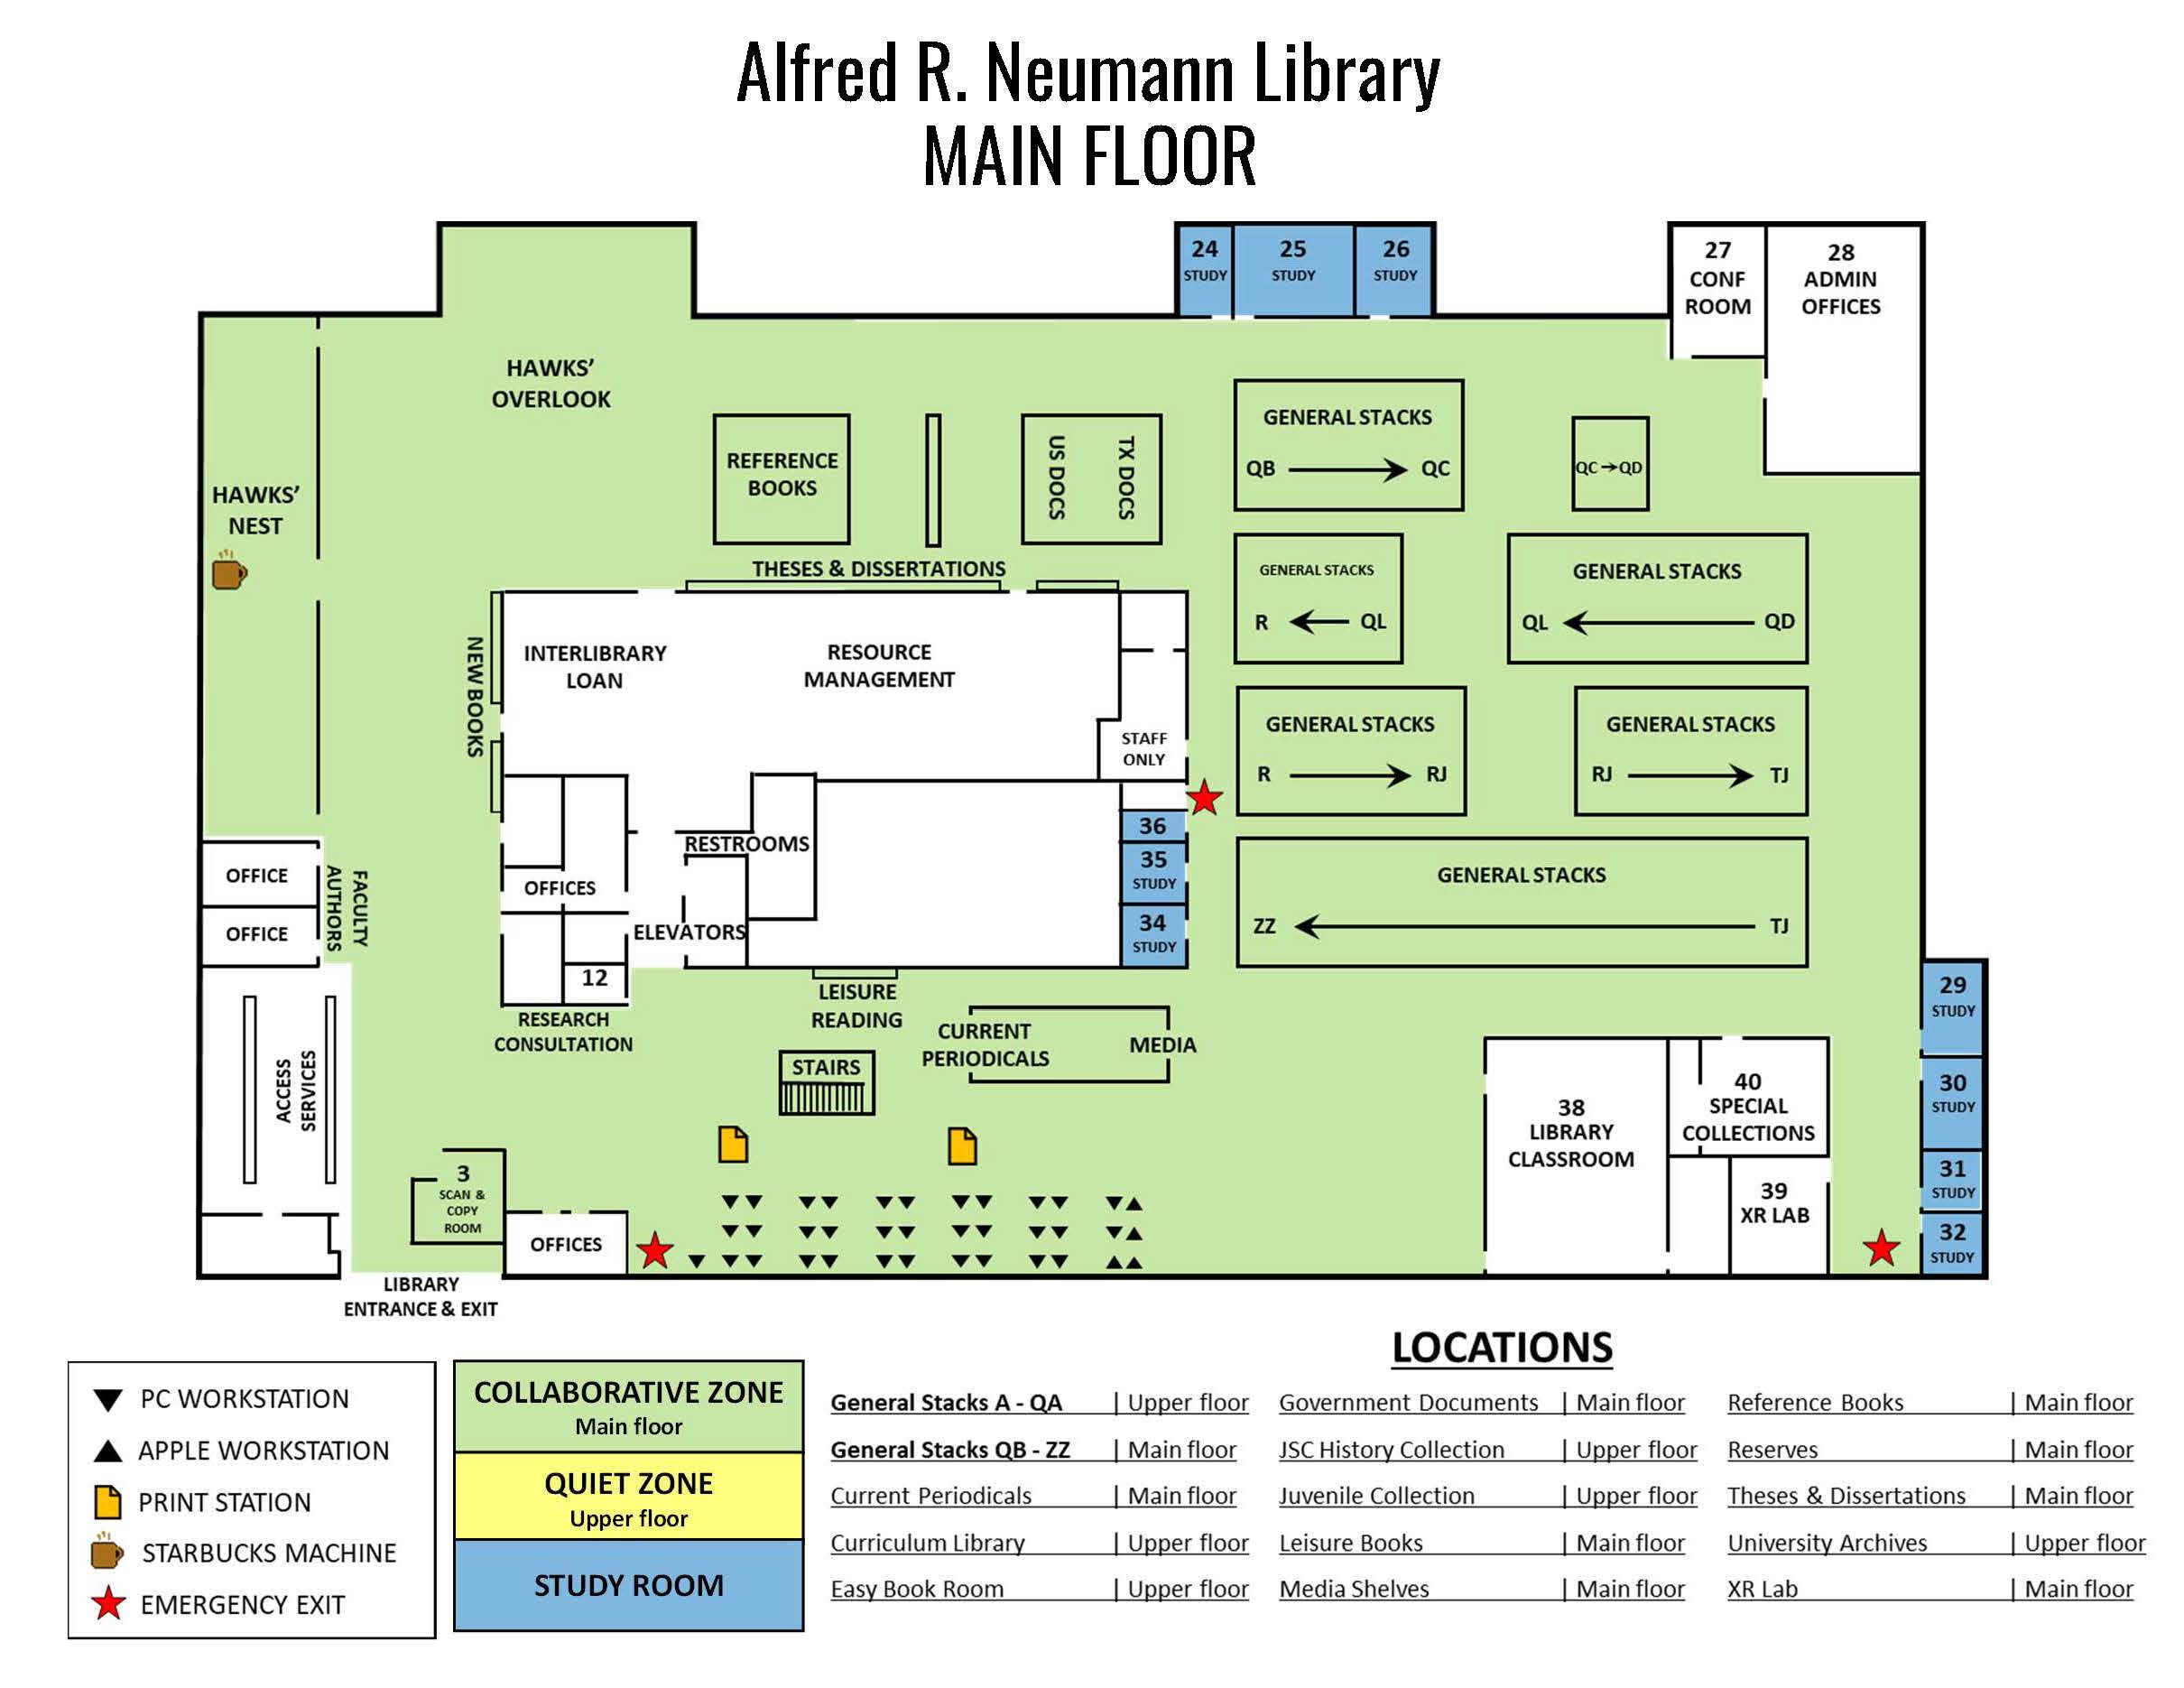 Alfred R. Neumann Library Main Floor Map